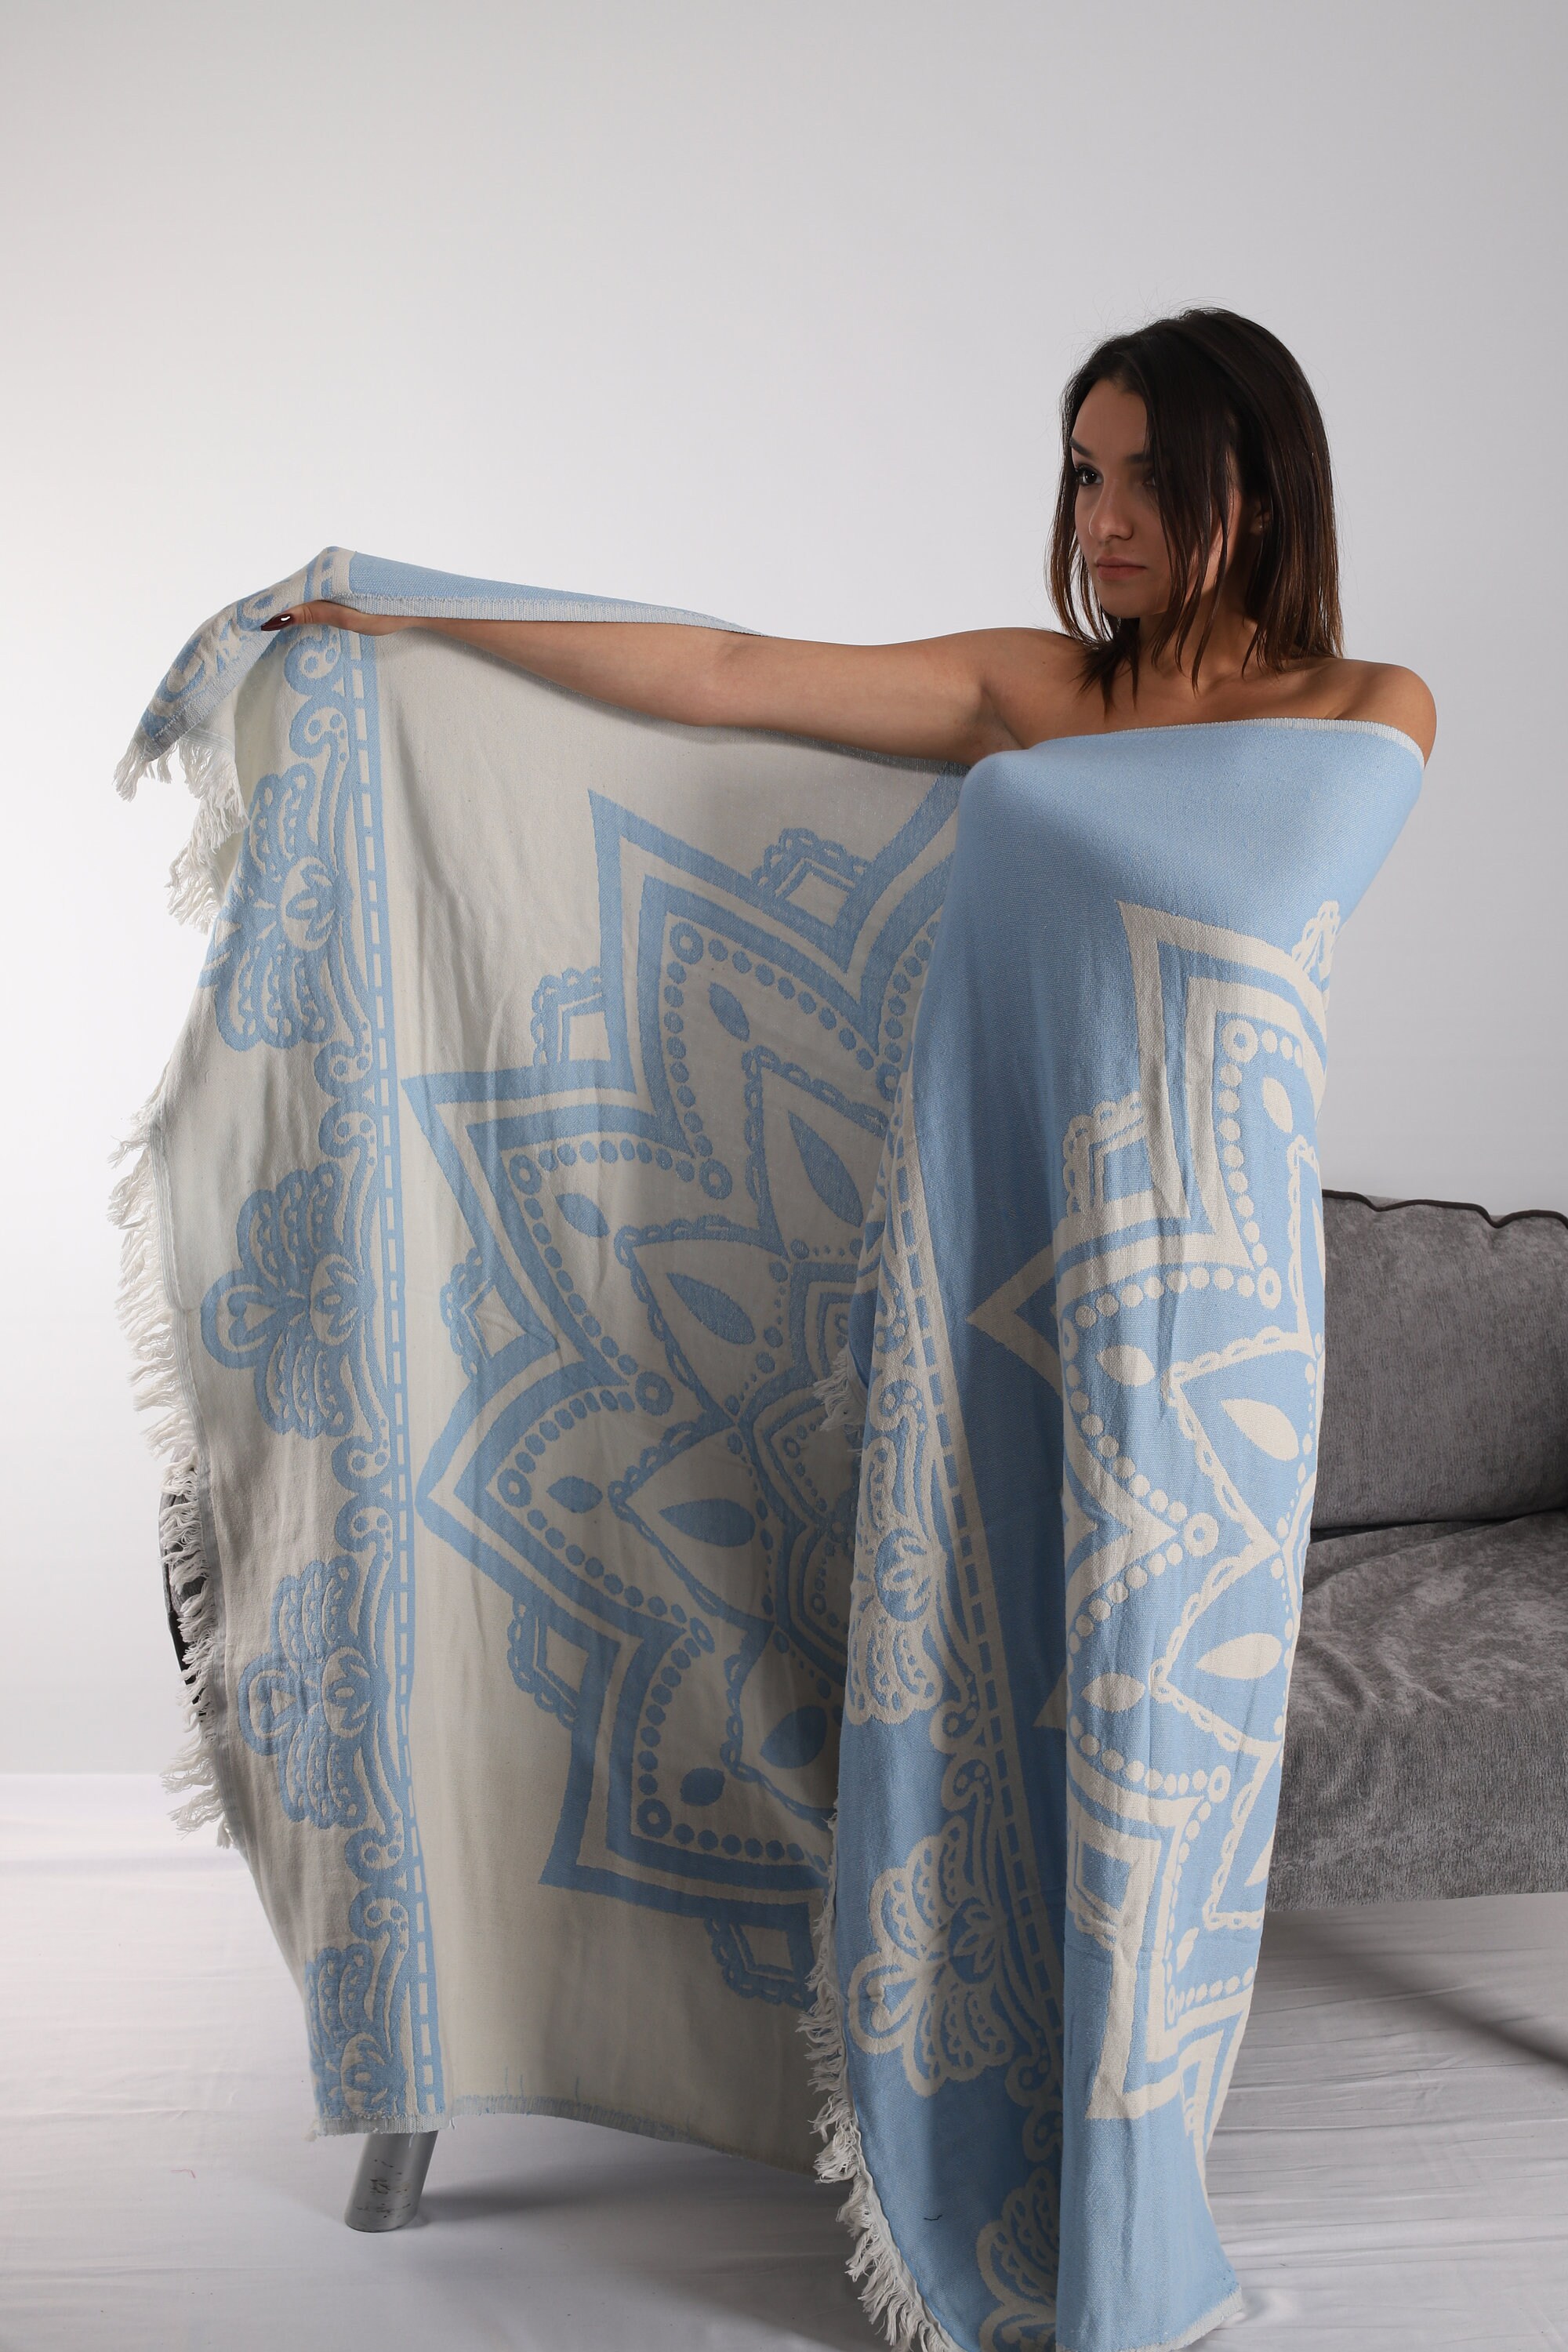 Sofa Throw Blanket Aztec Boho Blanket merry christmas | Etsy